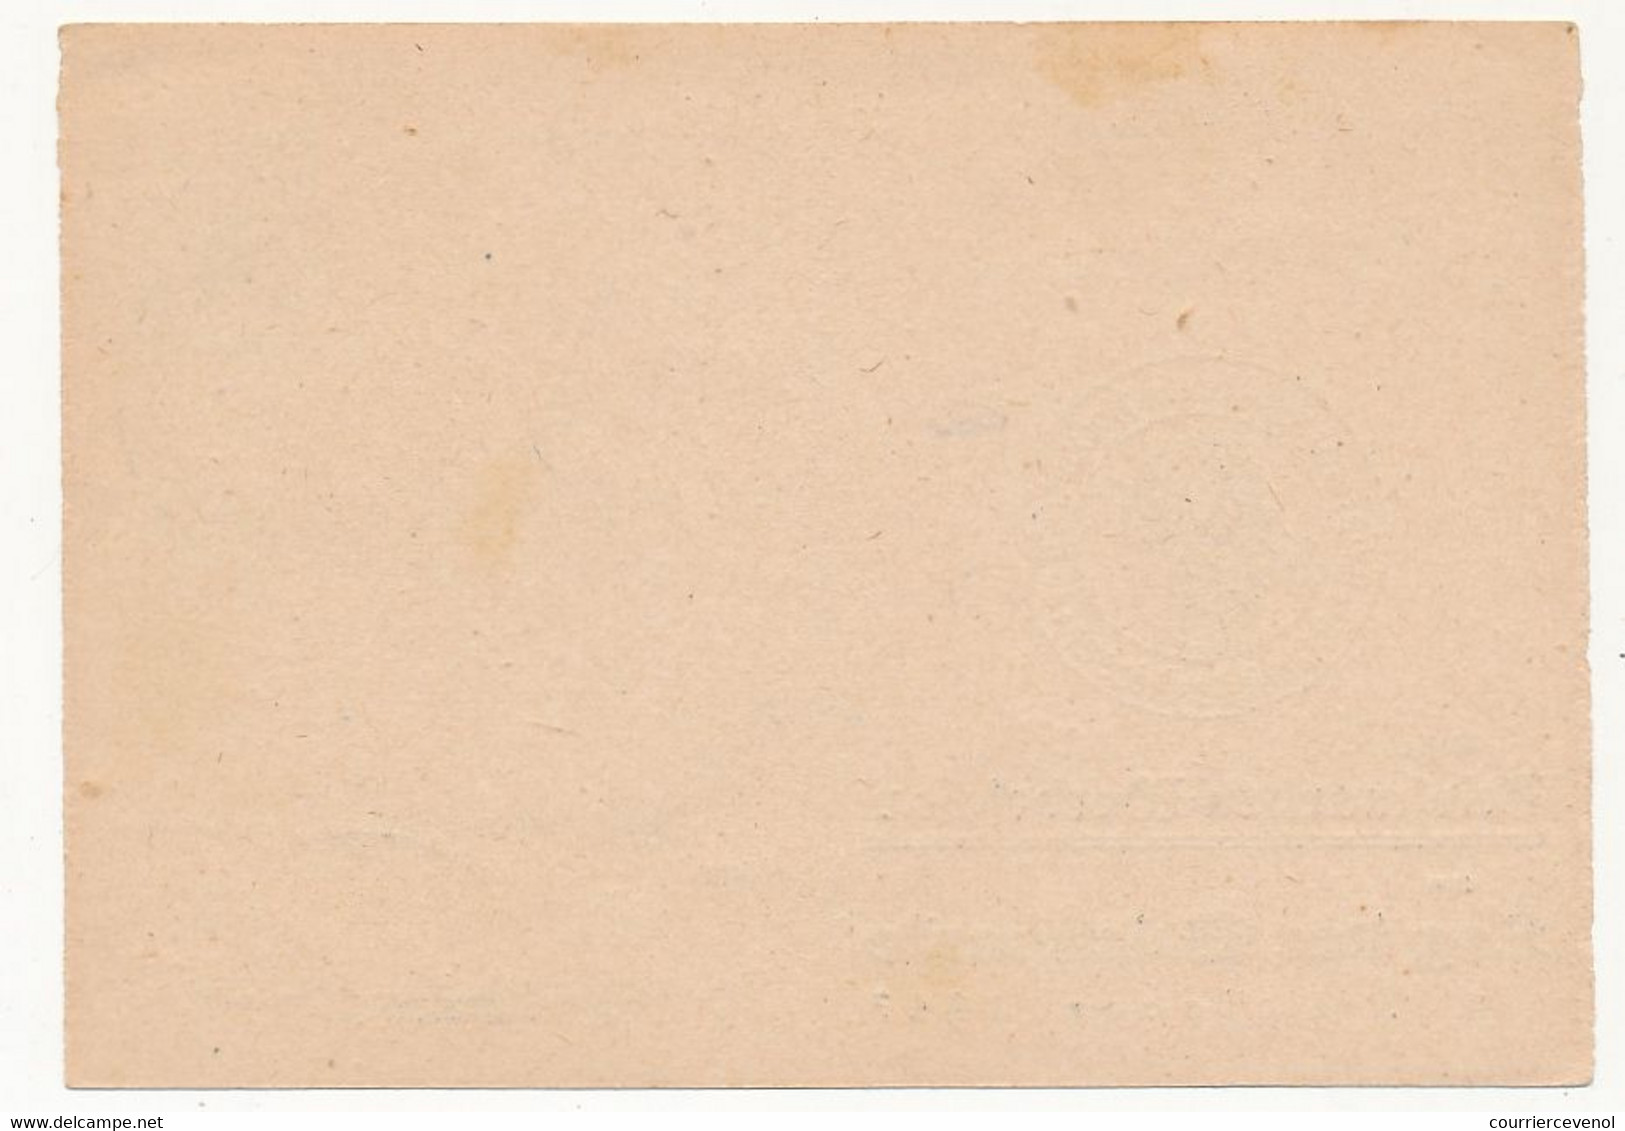 ALLEMAGNE - 4 Entiers Postaux Oblitérés Journée Du Timbre 1947 - Kiel, Holzminden, Schleswig, Münster (repiquage) - Tag Der Briefmarke